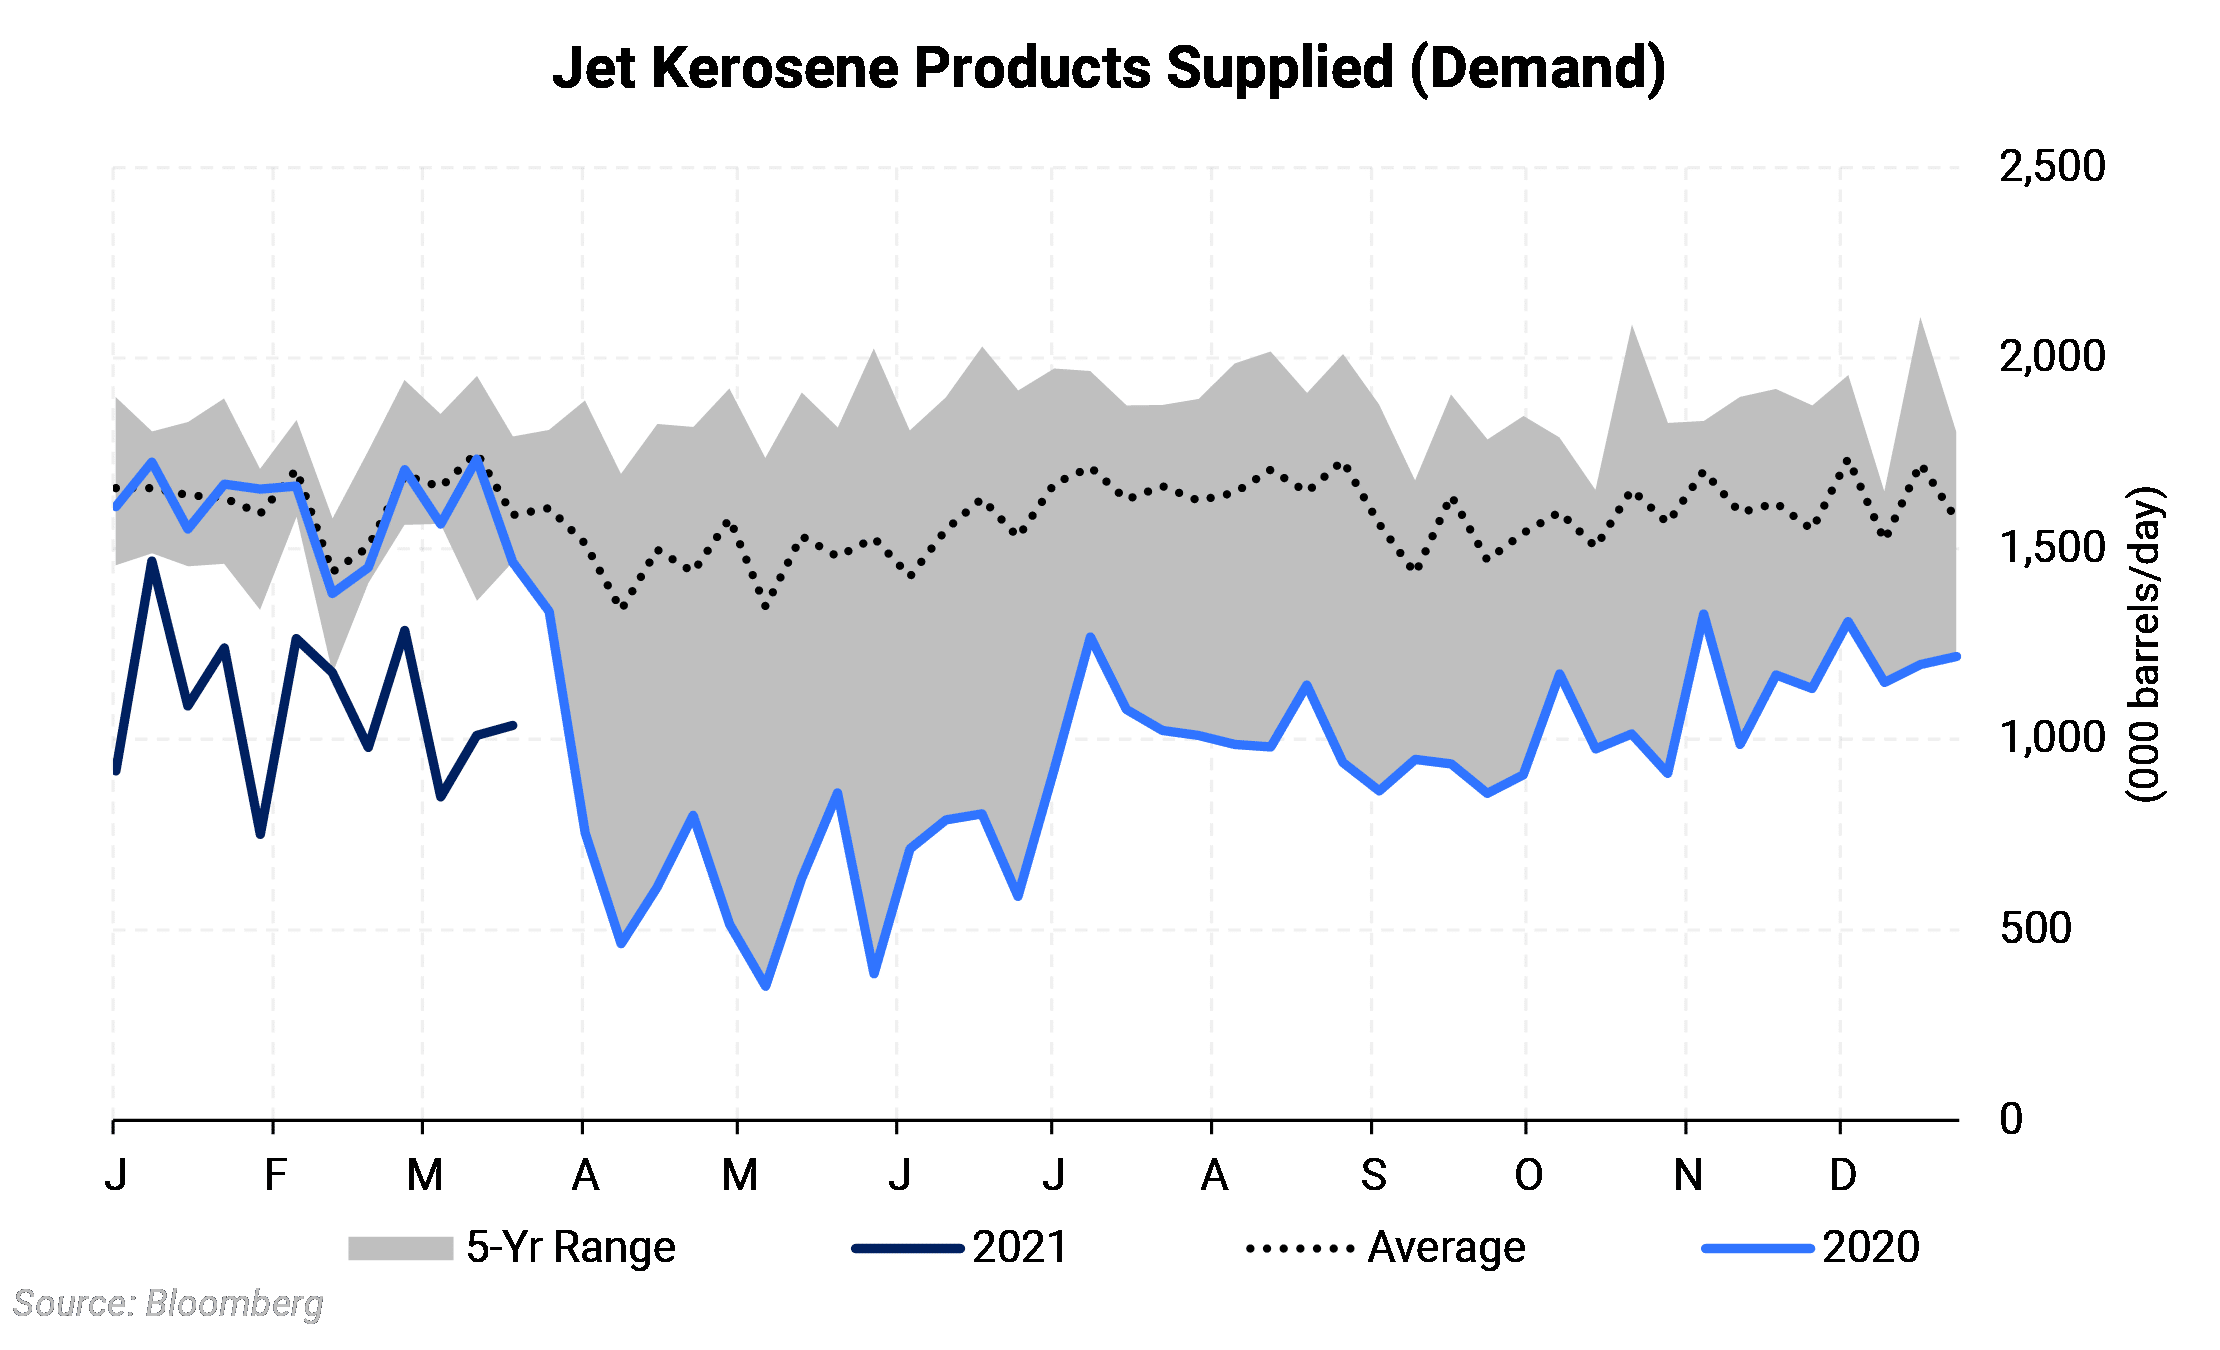 Jet Kerosene Products